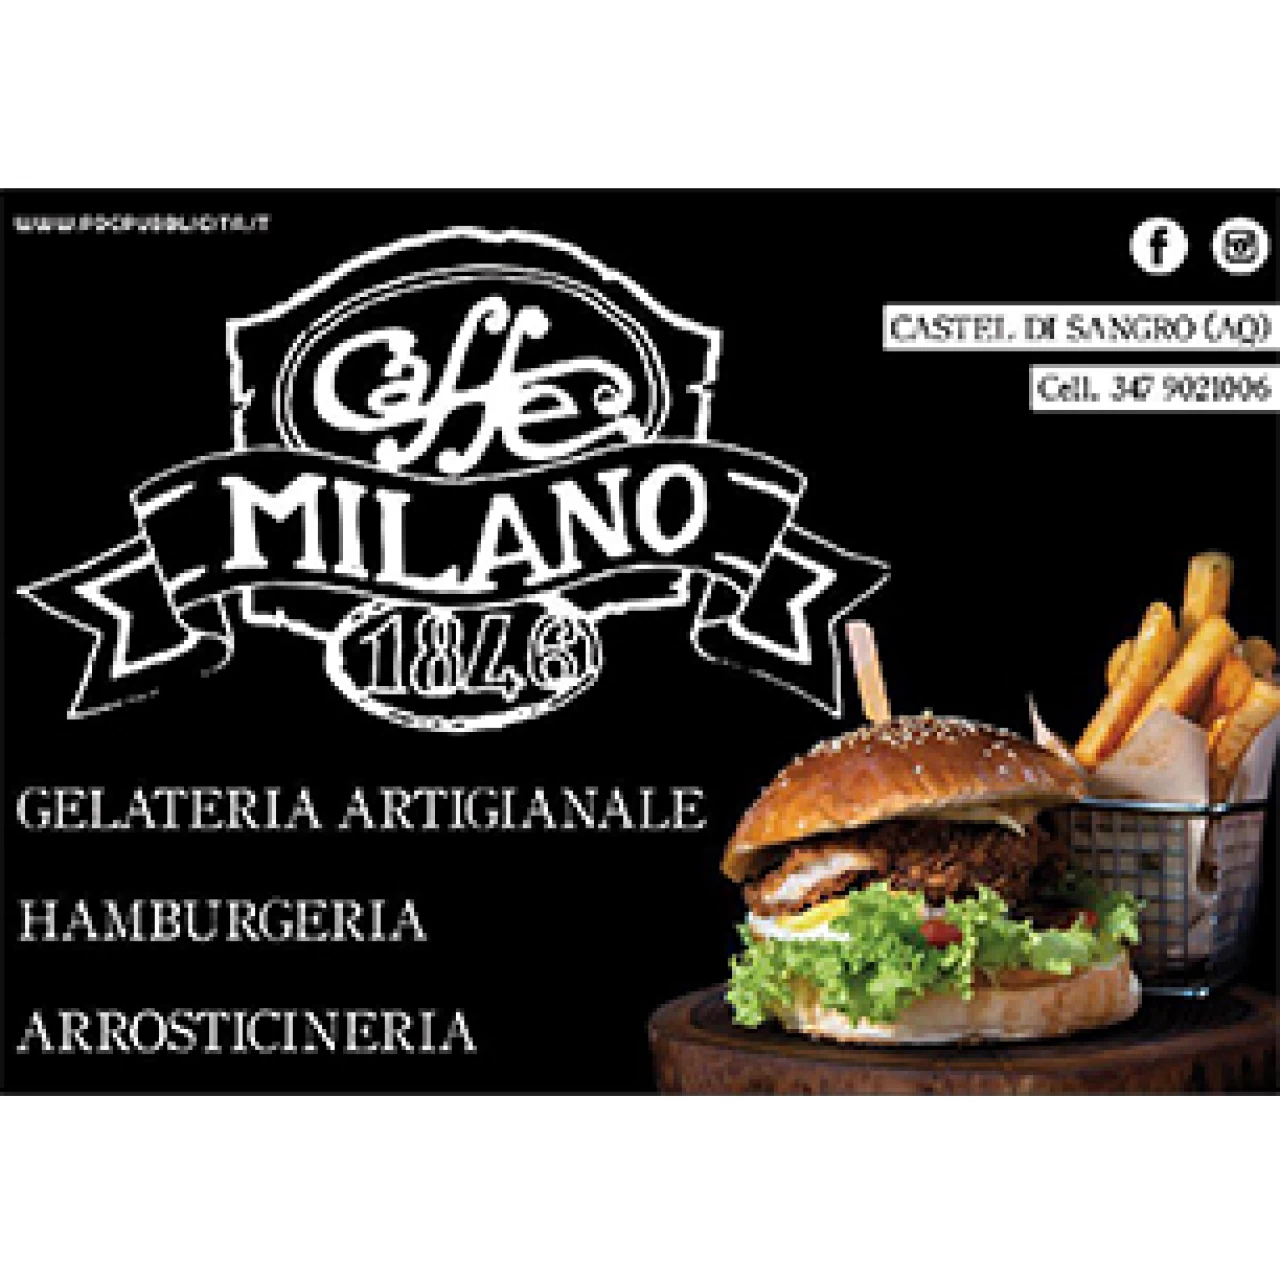 Banner Caffe' Milano Castel Di Sangro 306 per 306 pixel